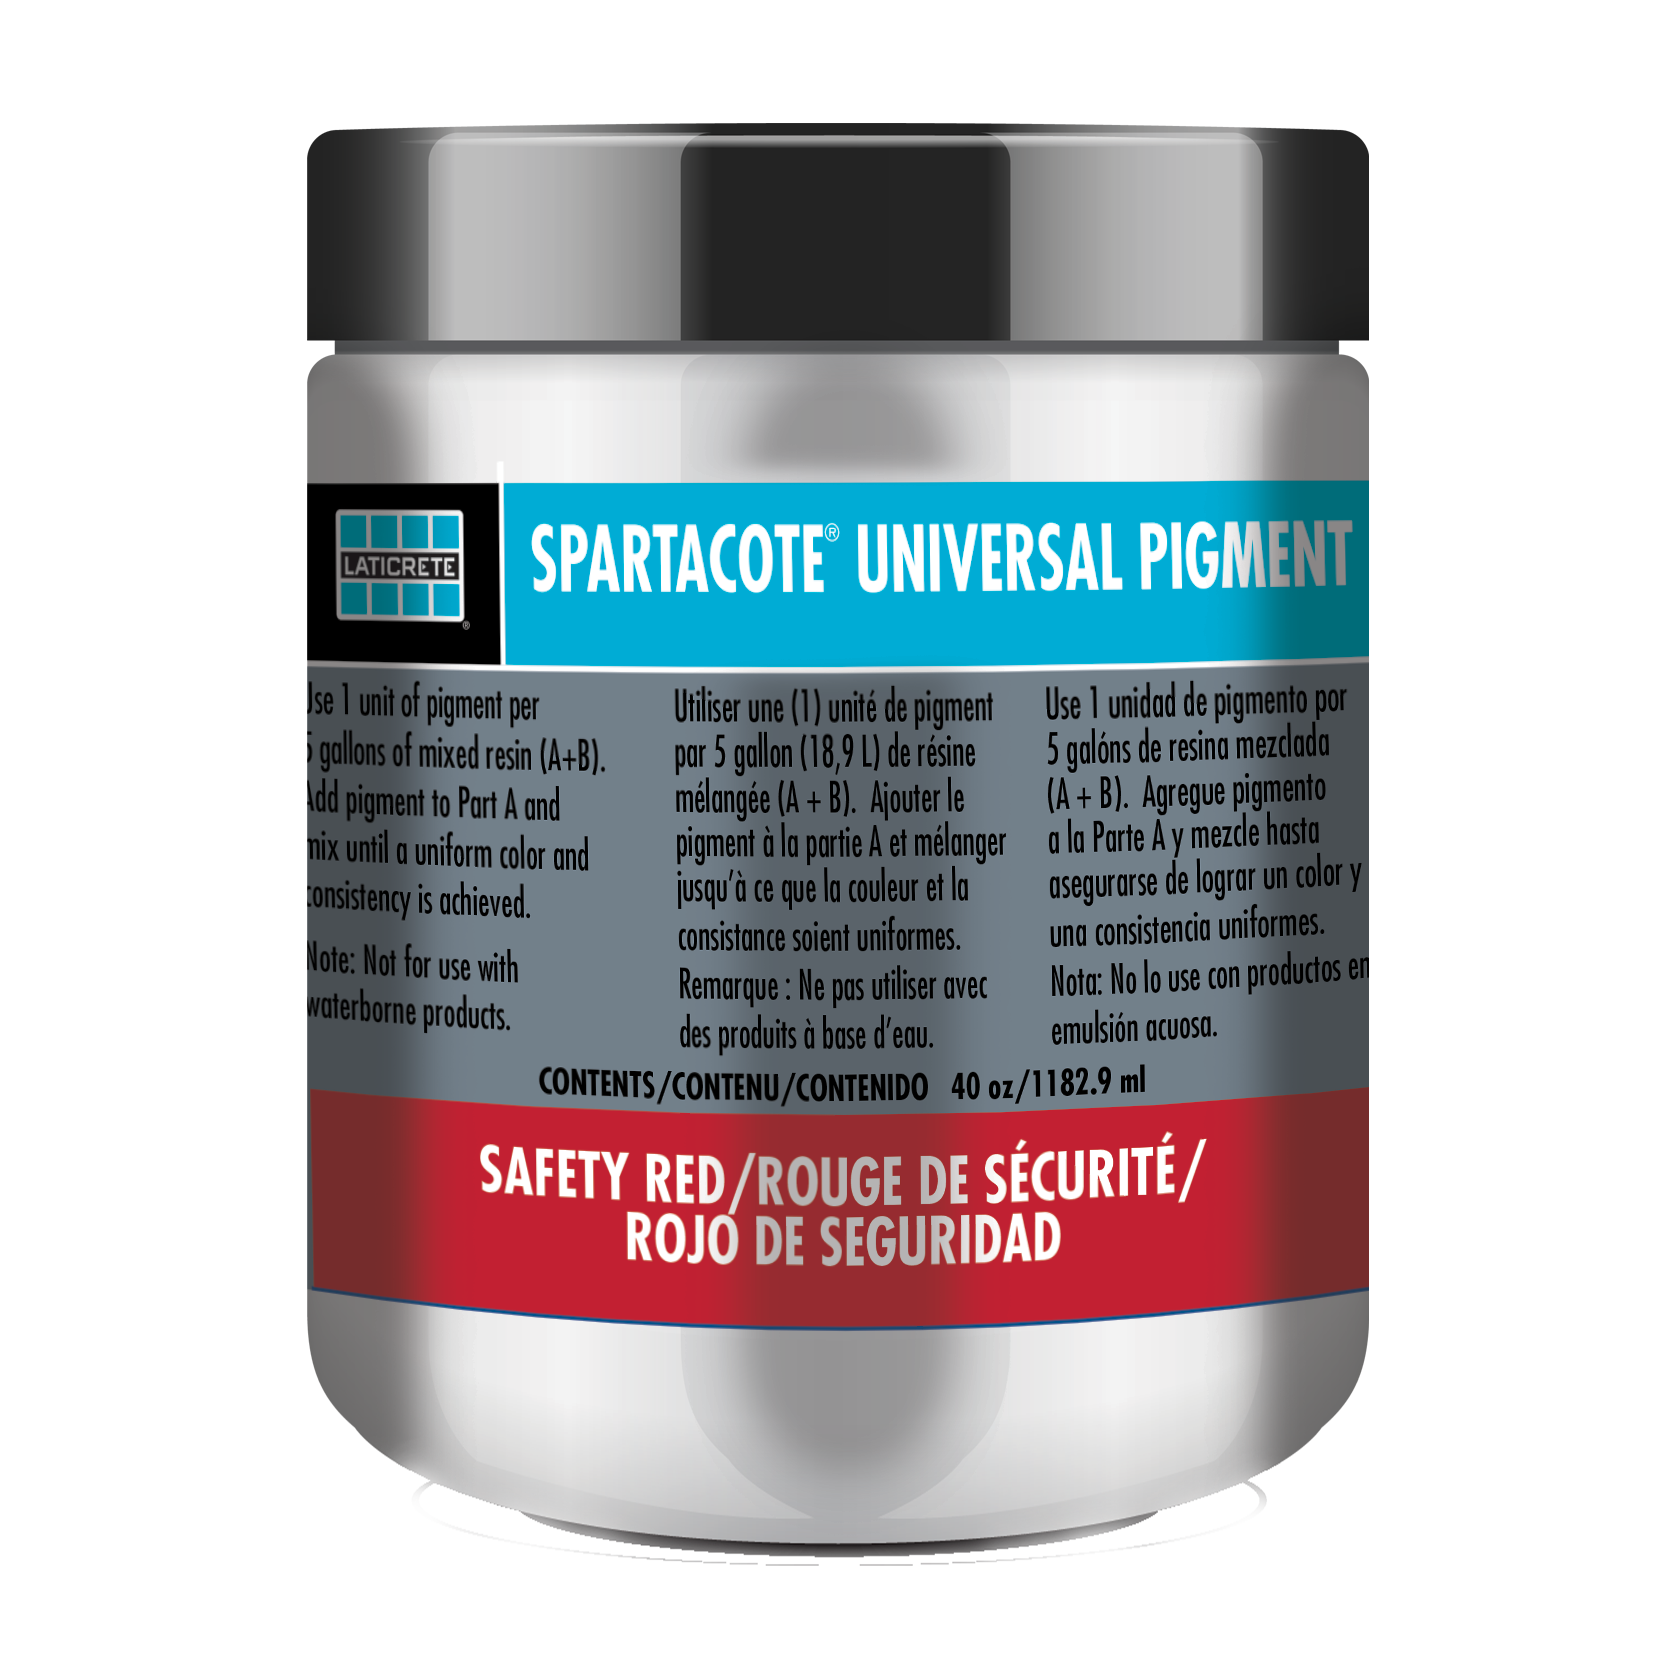 SPARTACOTE® Universal Pigments